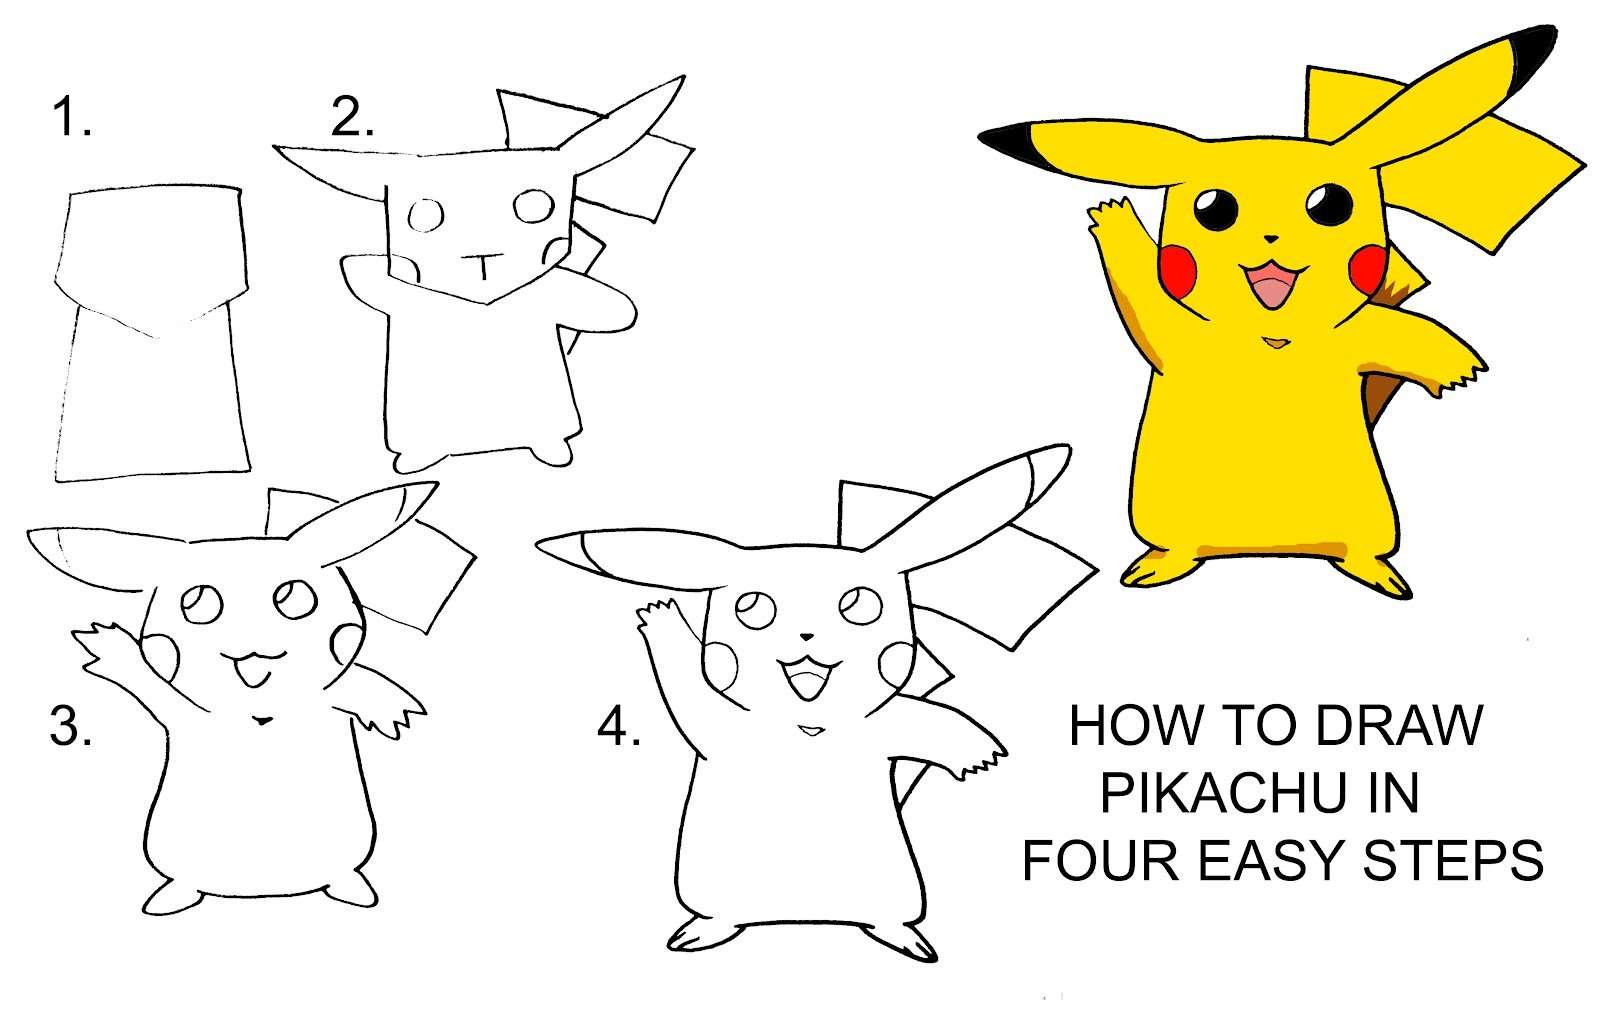 DARYL HOBSON ARTWORK: How To Draw Pikachu Step By Step